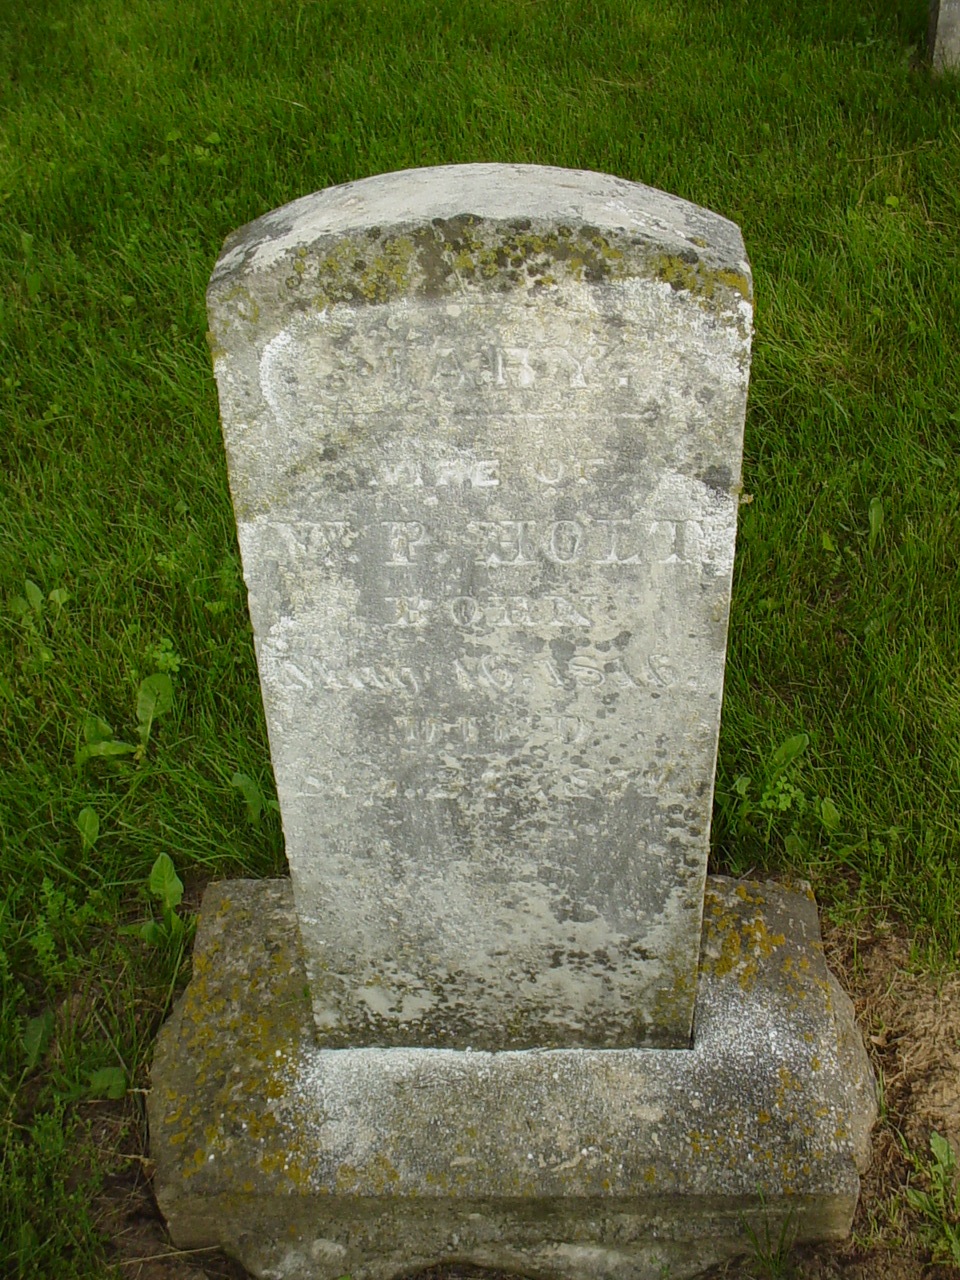  Mary Blythe Holt Headstone Photo, Old Prospect Methodist Cemetery, Callaway County genealogy